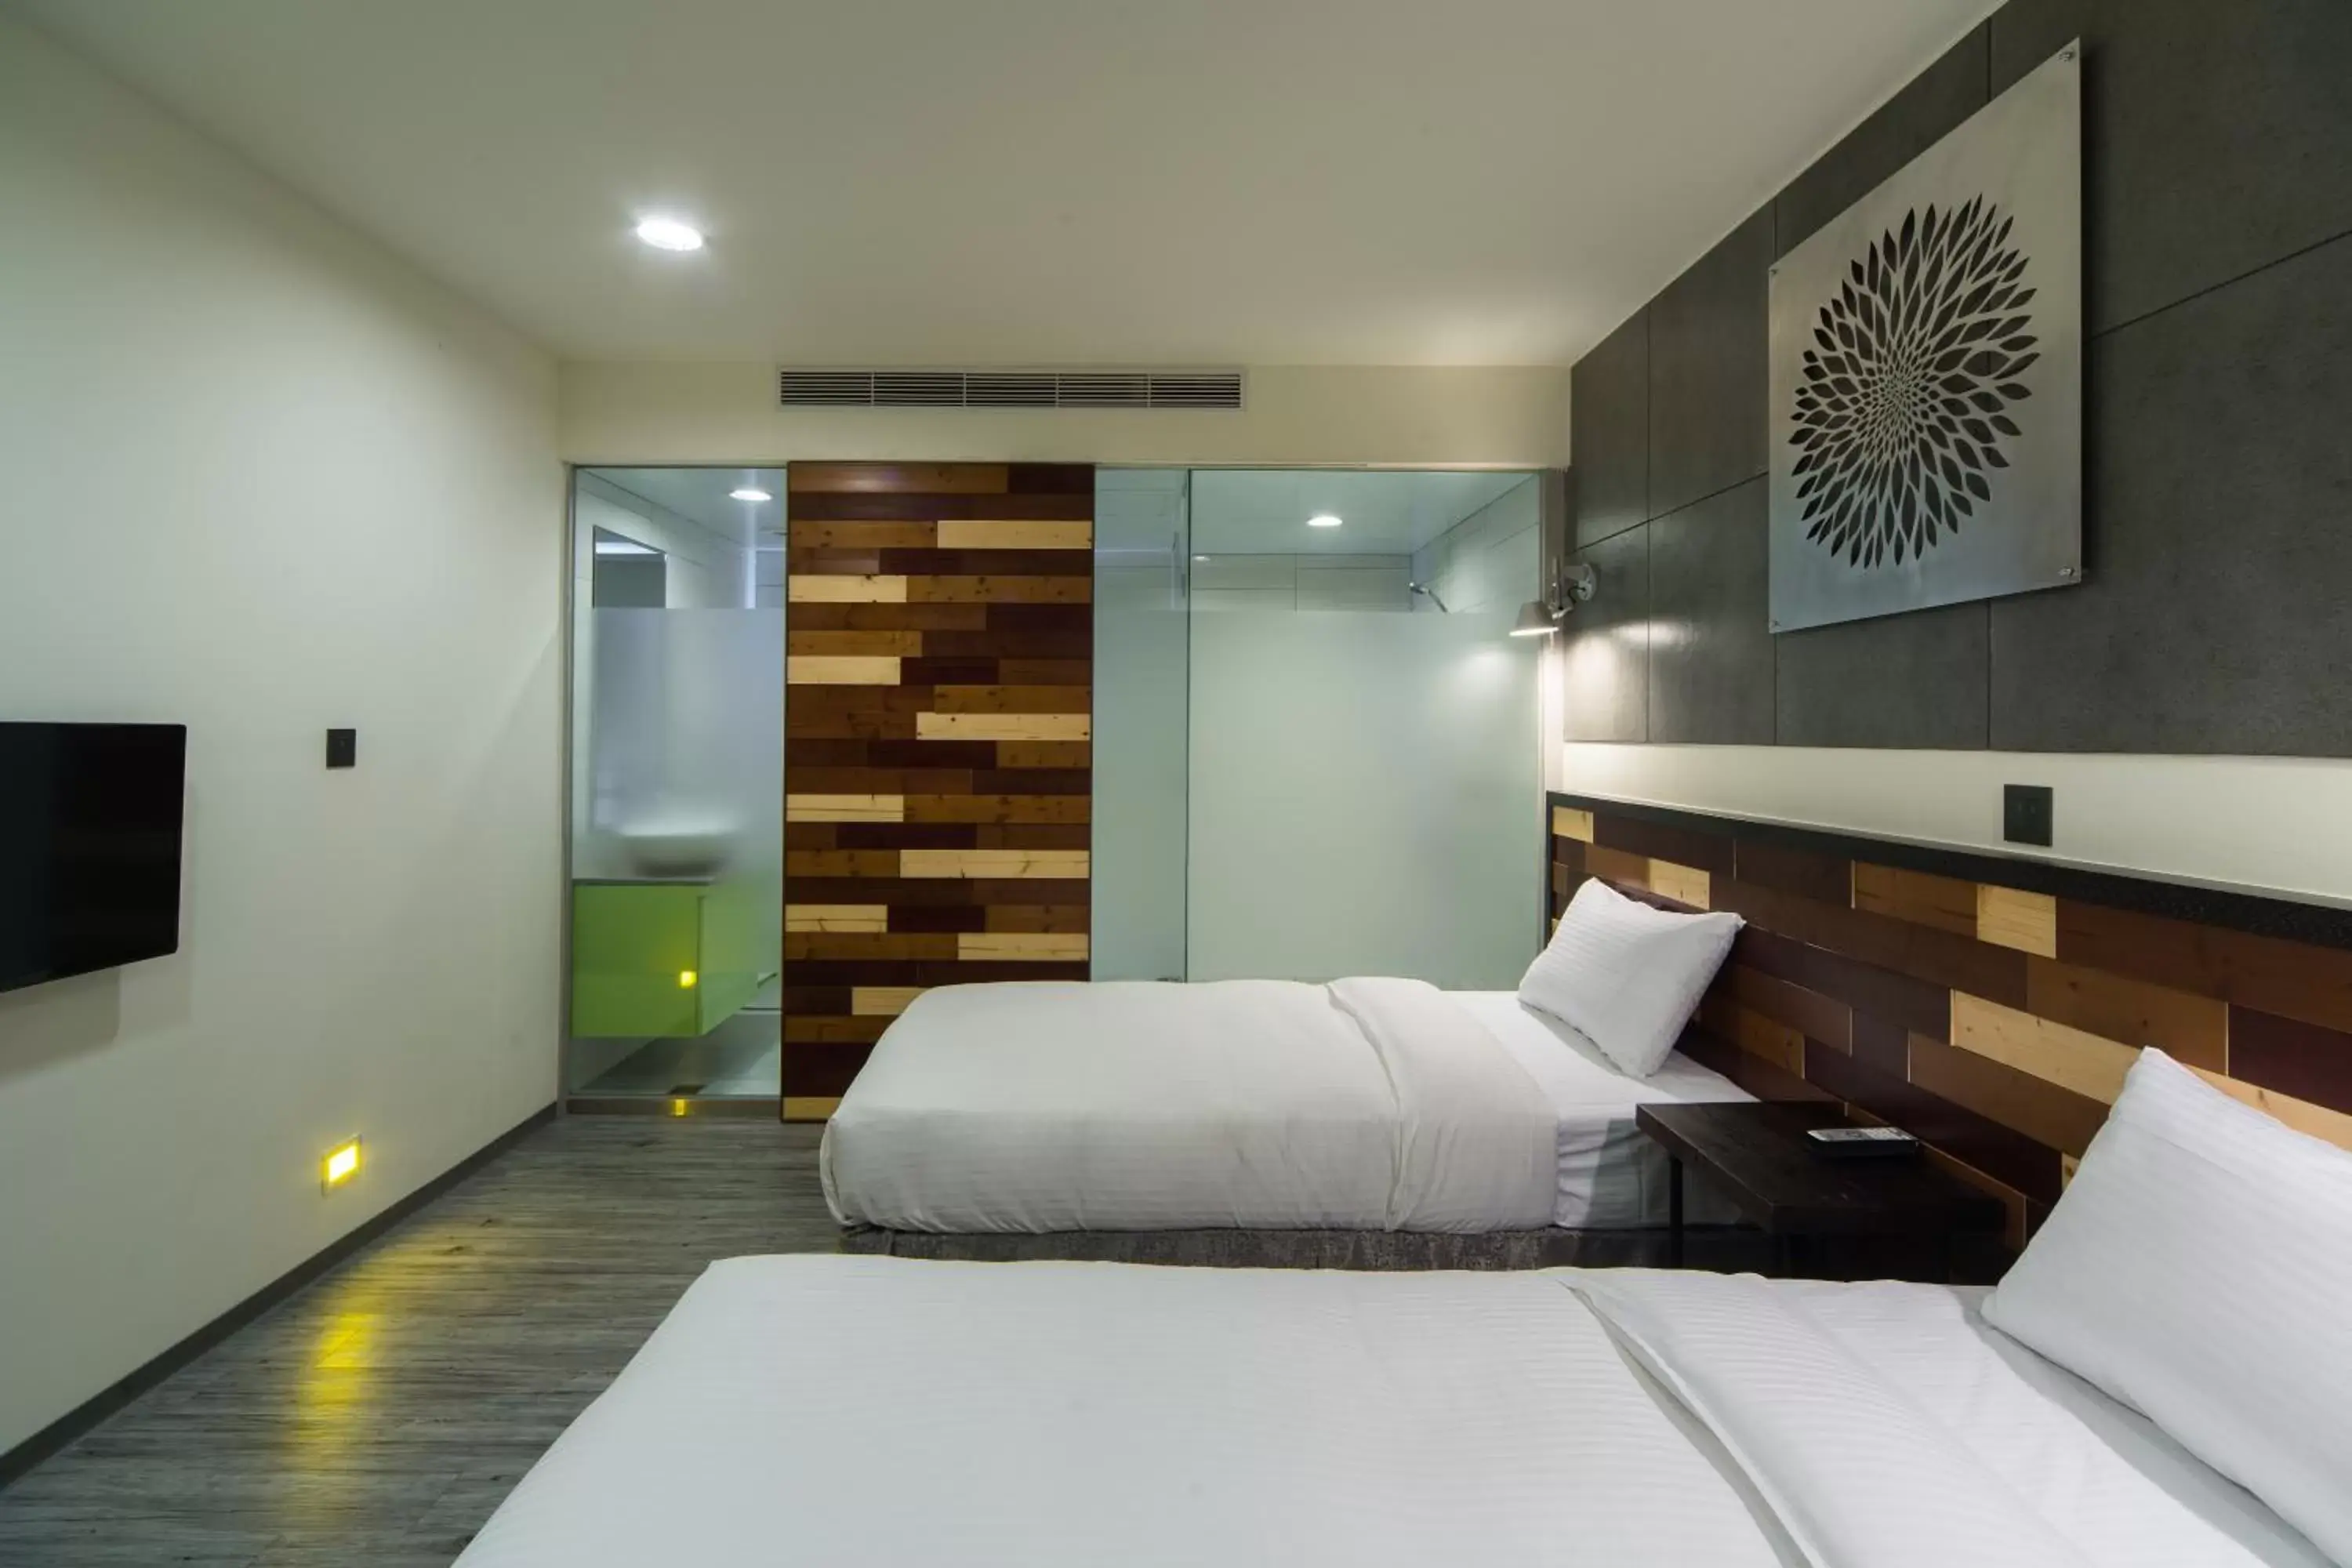 Bed in Xinshe Hotel - Hsinchu